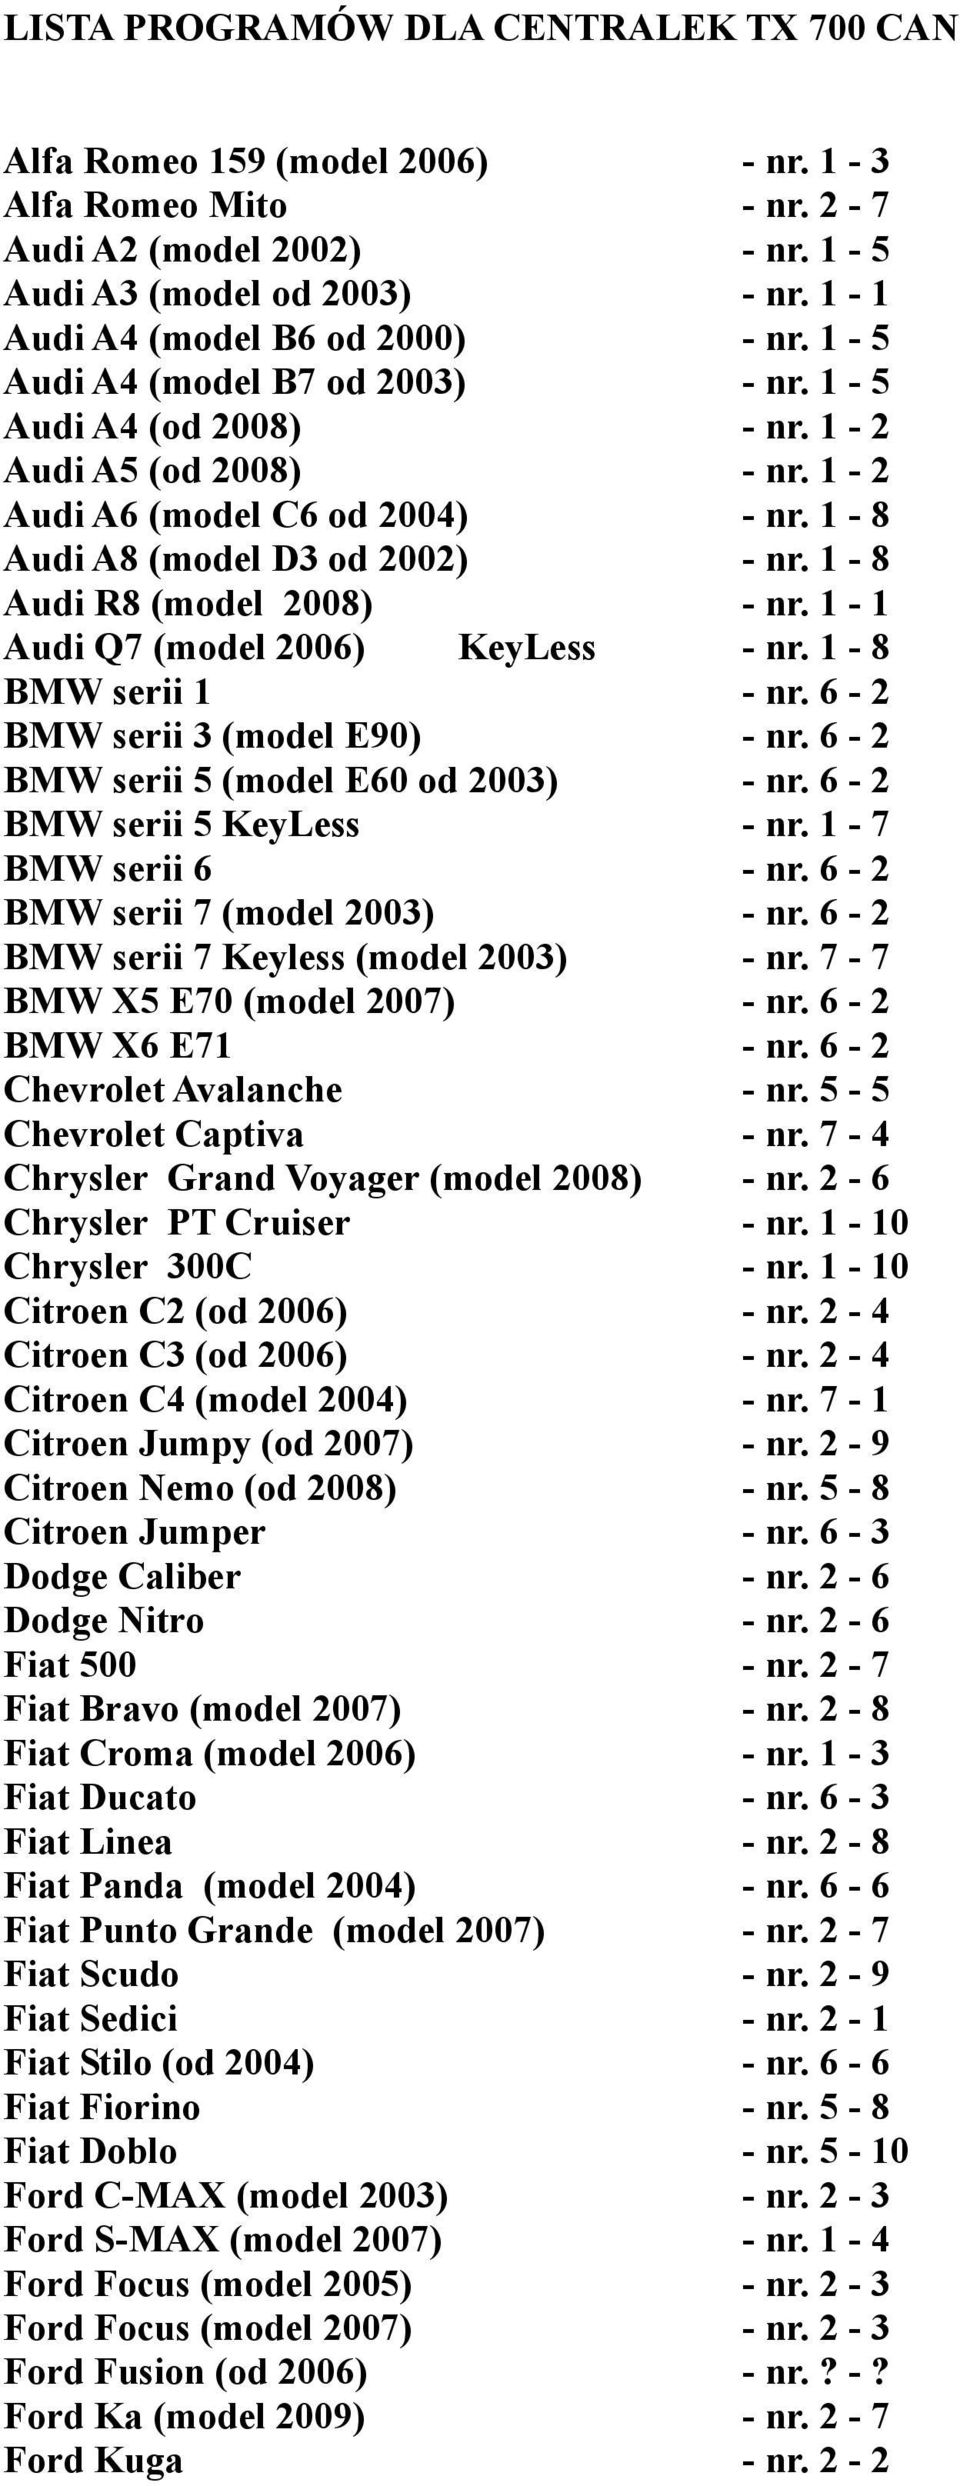 1-8 Audi A8 (model D3 od 2002) - nr. 1-8 Audi R8 (model 2008) - nr. 1-1 Audi Q7 (model 2006) KeyLess - nr. 1-8 BMW serii 1 - nr. 6-2 BMW serii 3 (model E90) - nr.